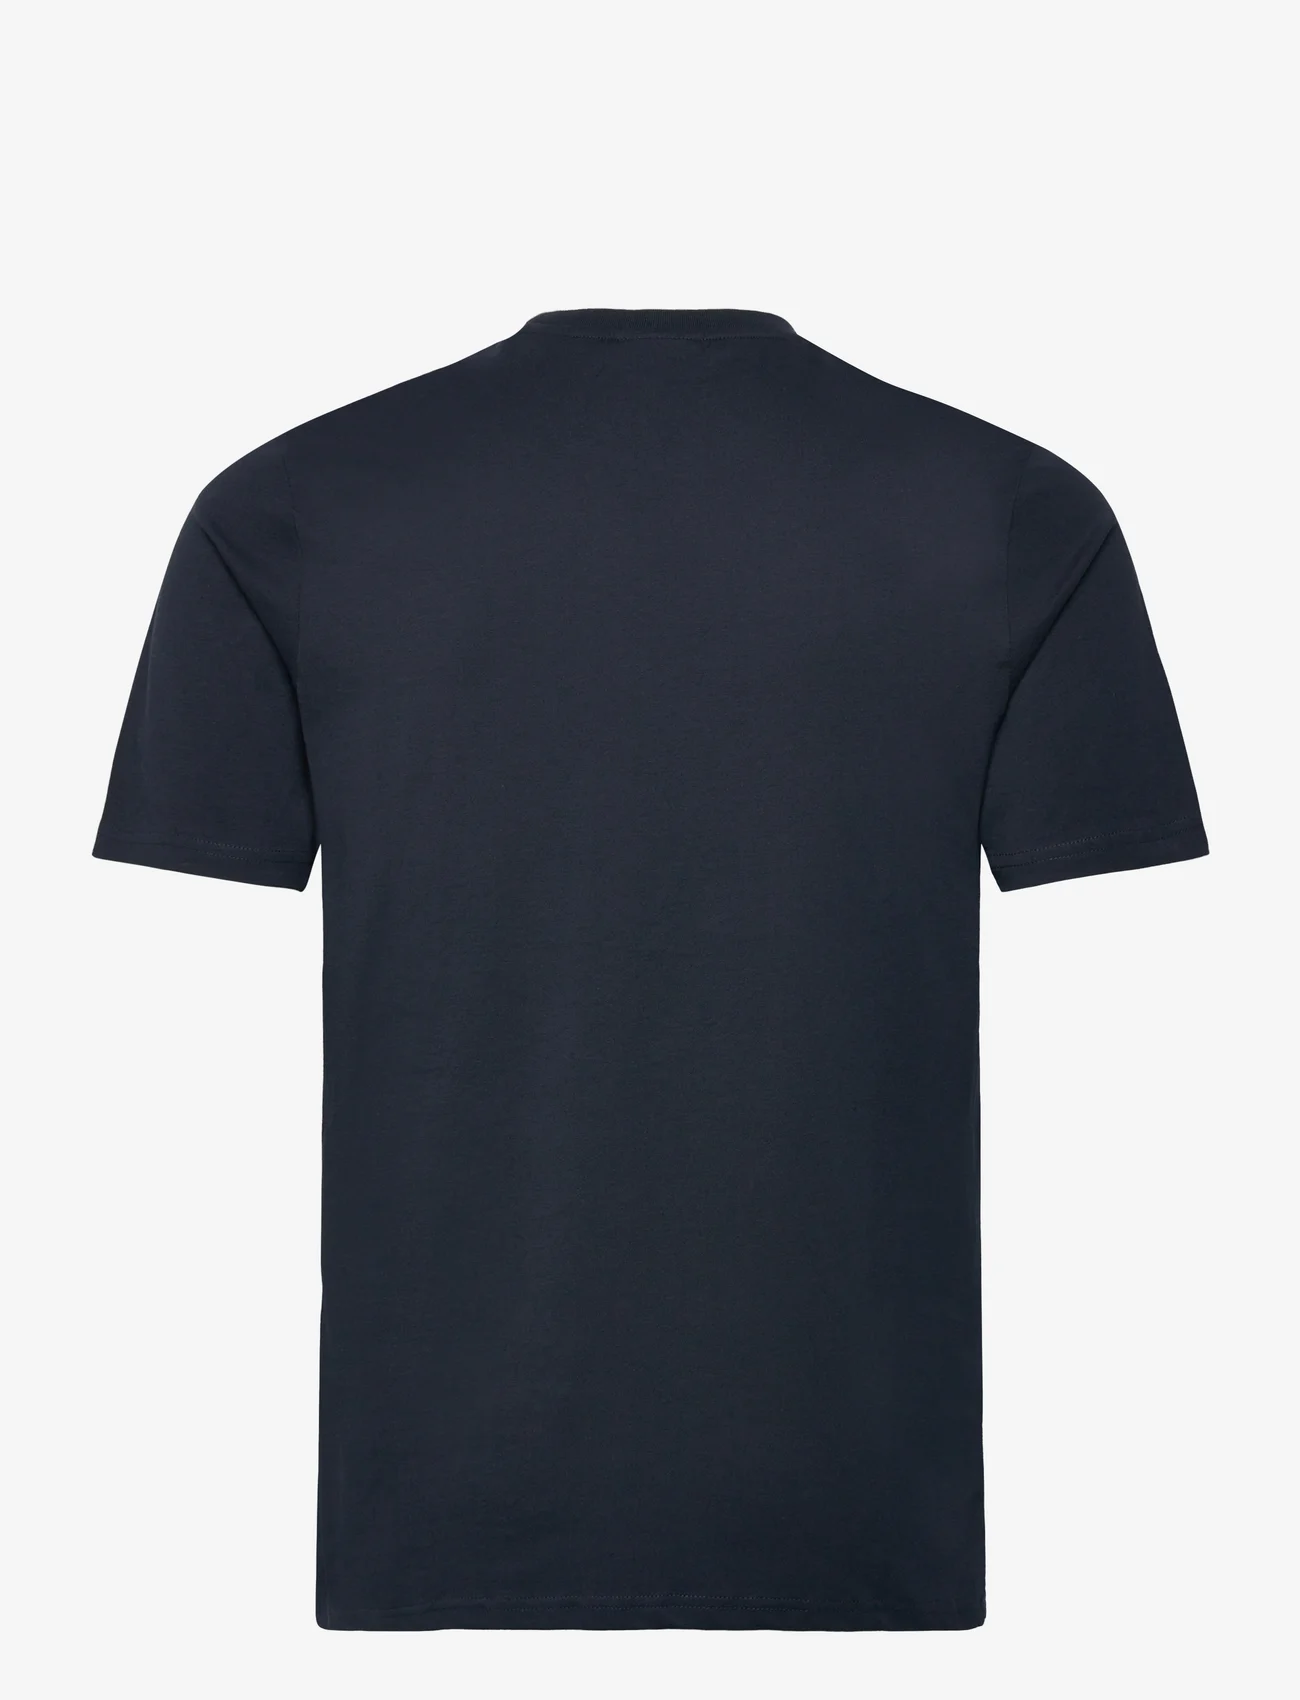 Lyle & Scott - Pocket T-Shirt - kortermede t-skjorter - z271 dark navy - 1